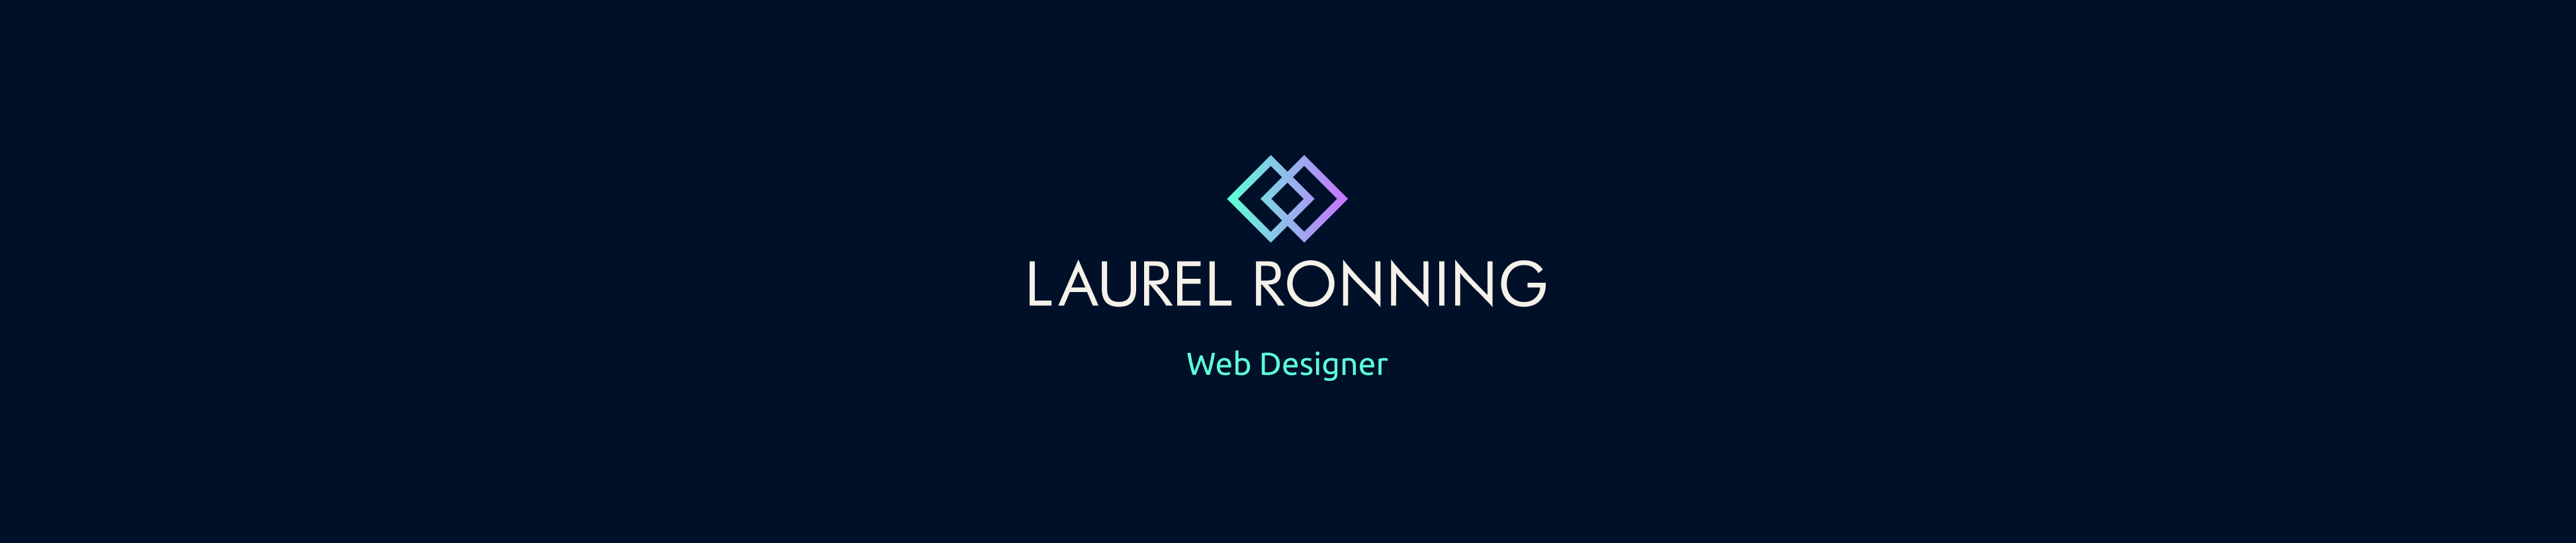 Laurel Ronnings profilbanner